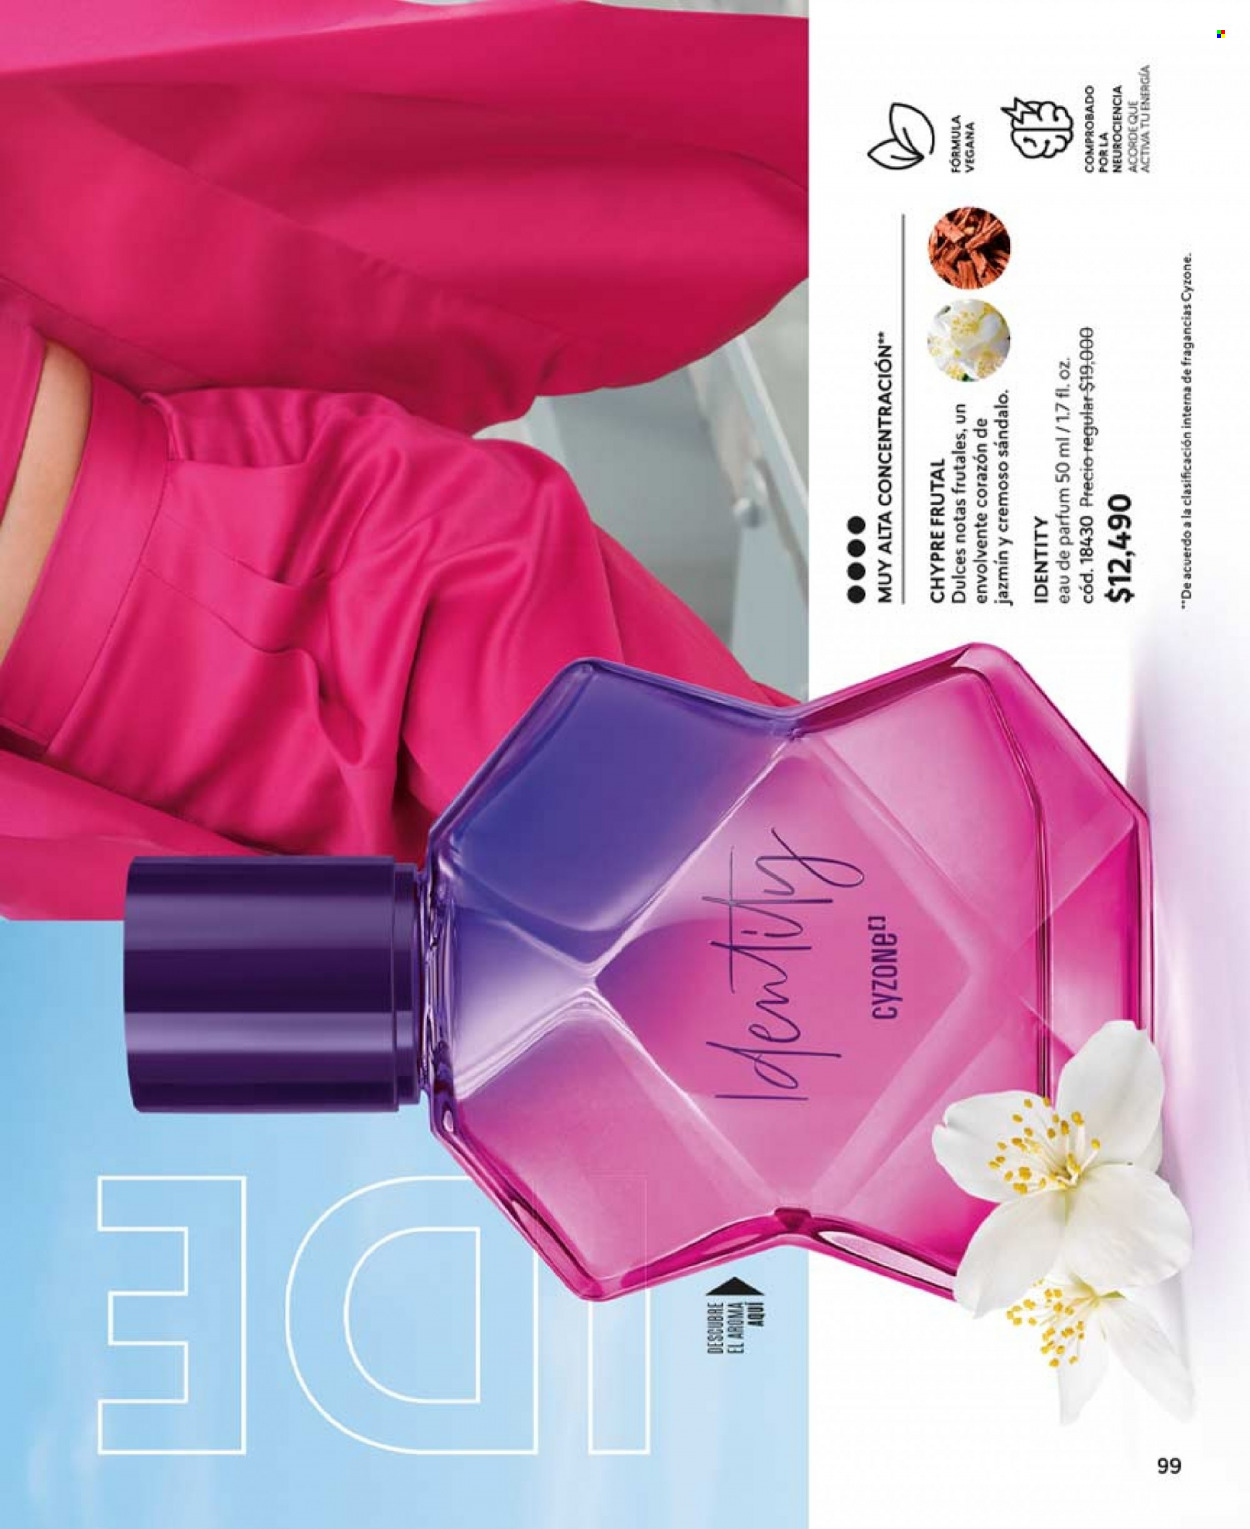 Catálogo Cyzone - Ventas - perfume. Página 99.